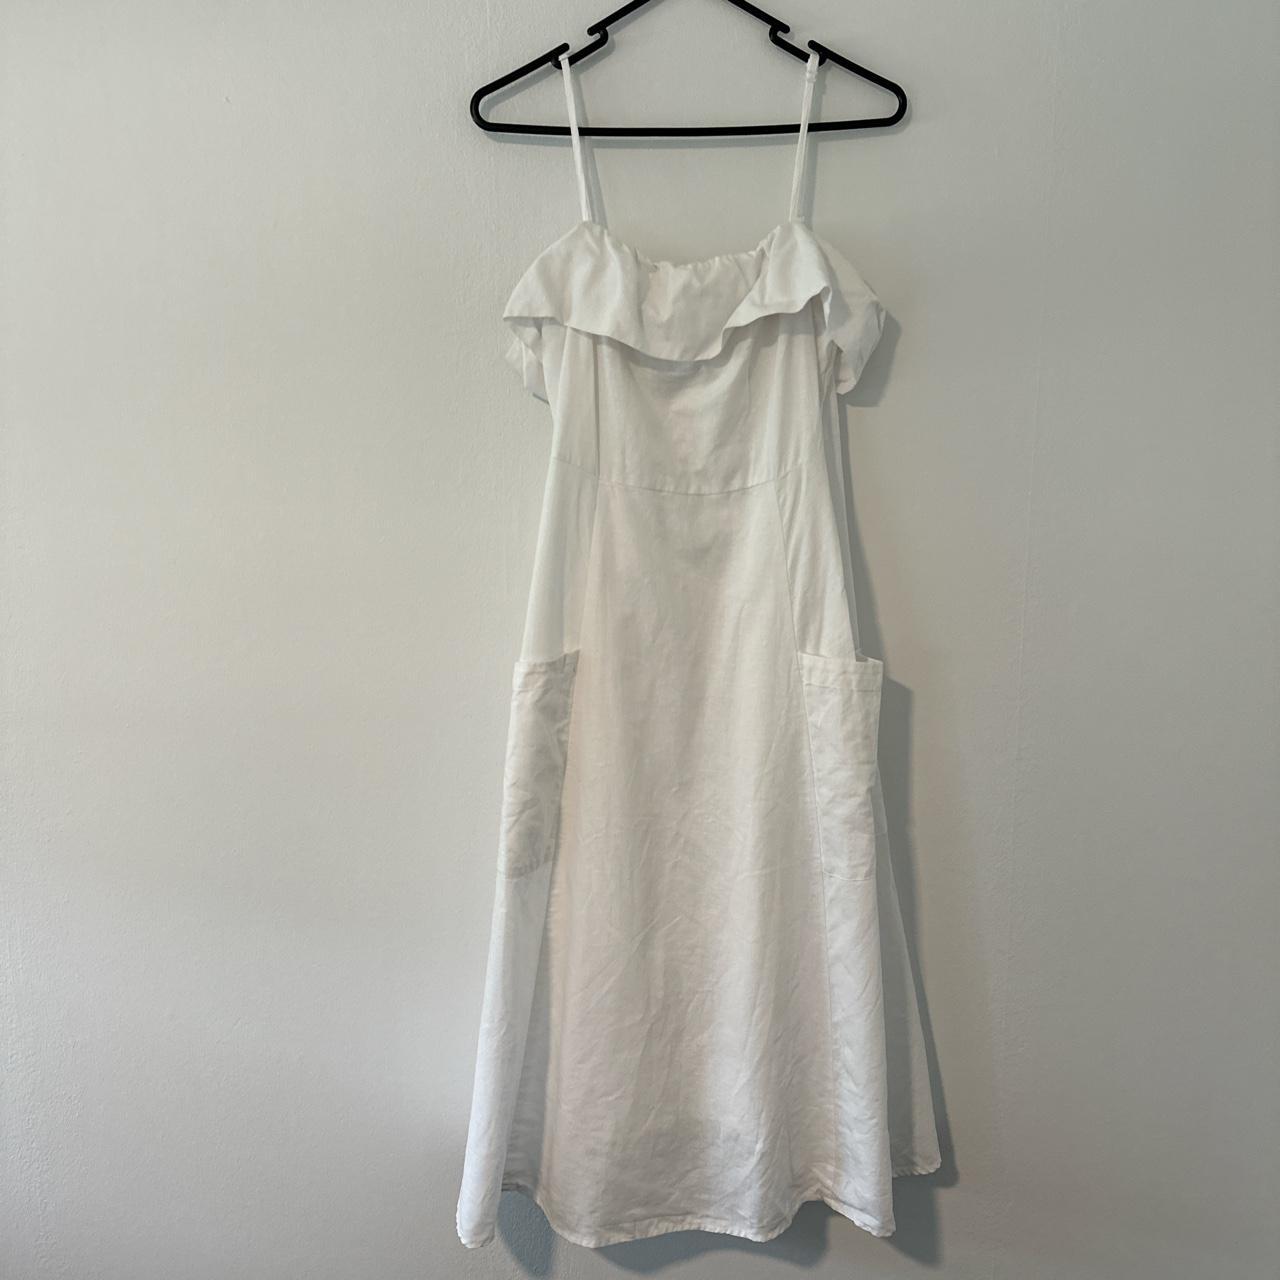 White cotton/linen blend midi dress. Adjustable... - Depop